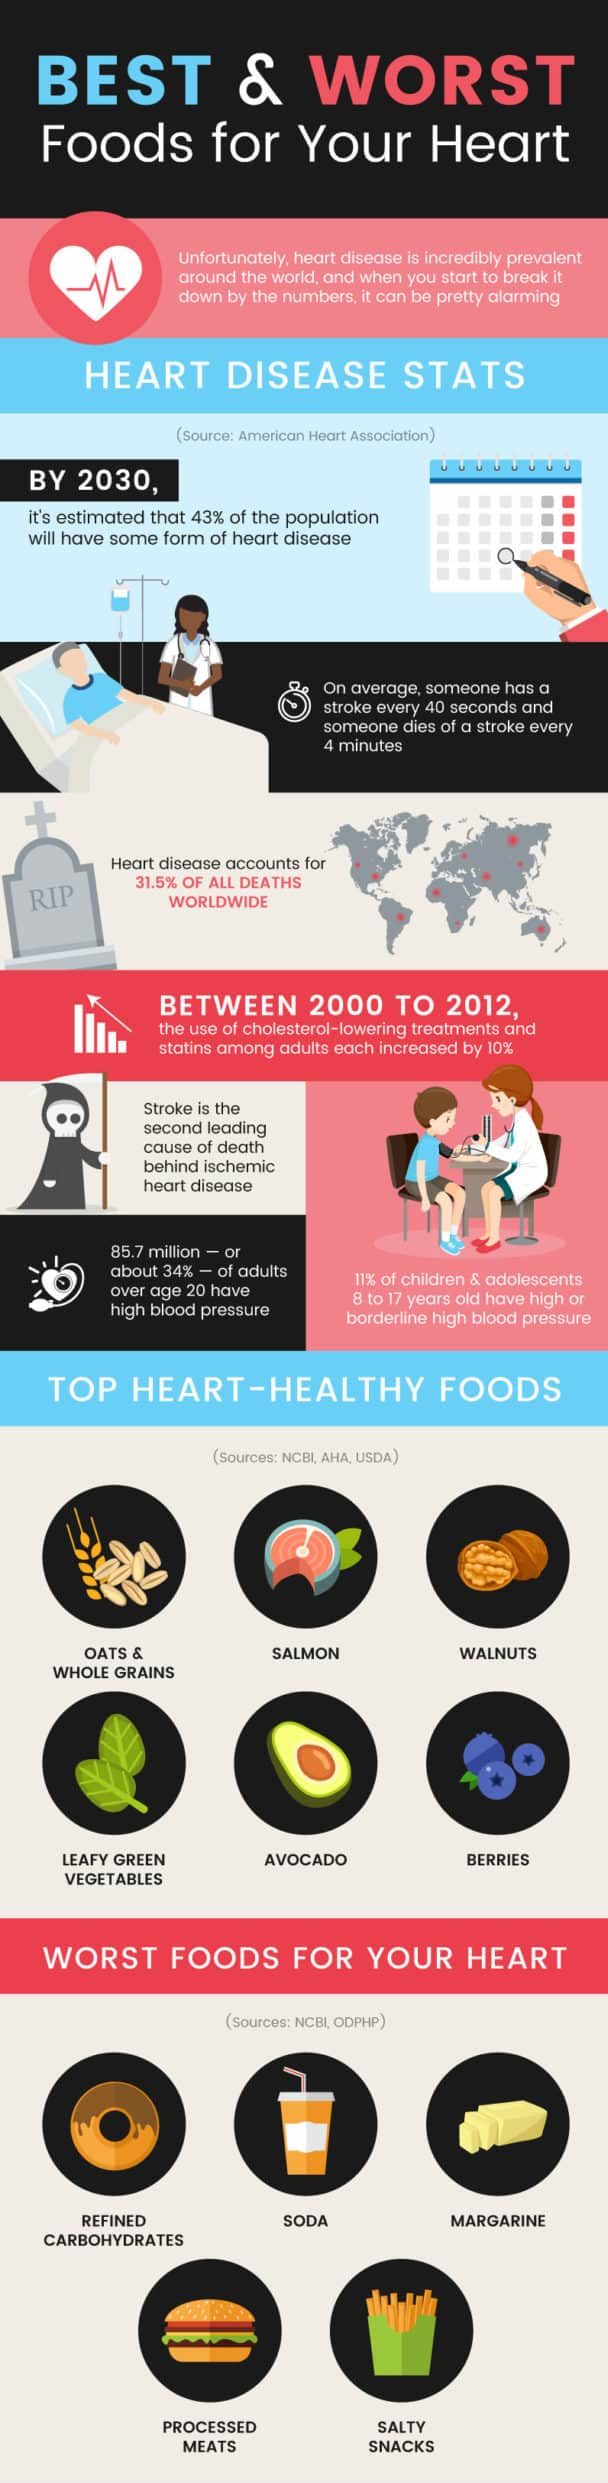 Heart healthy foods - Dr. Axe